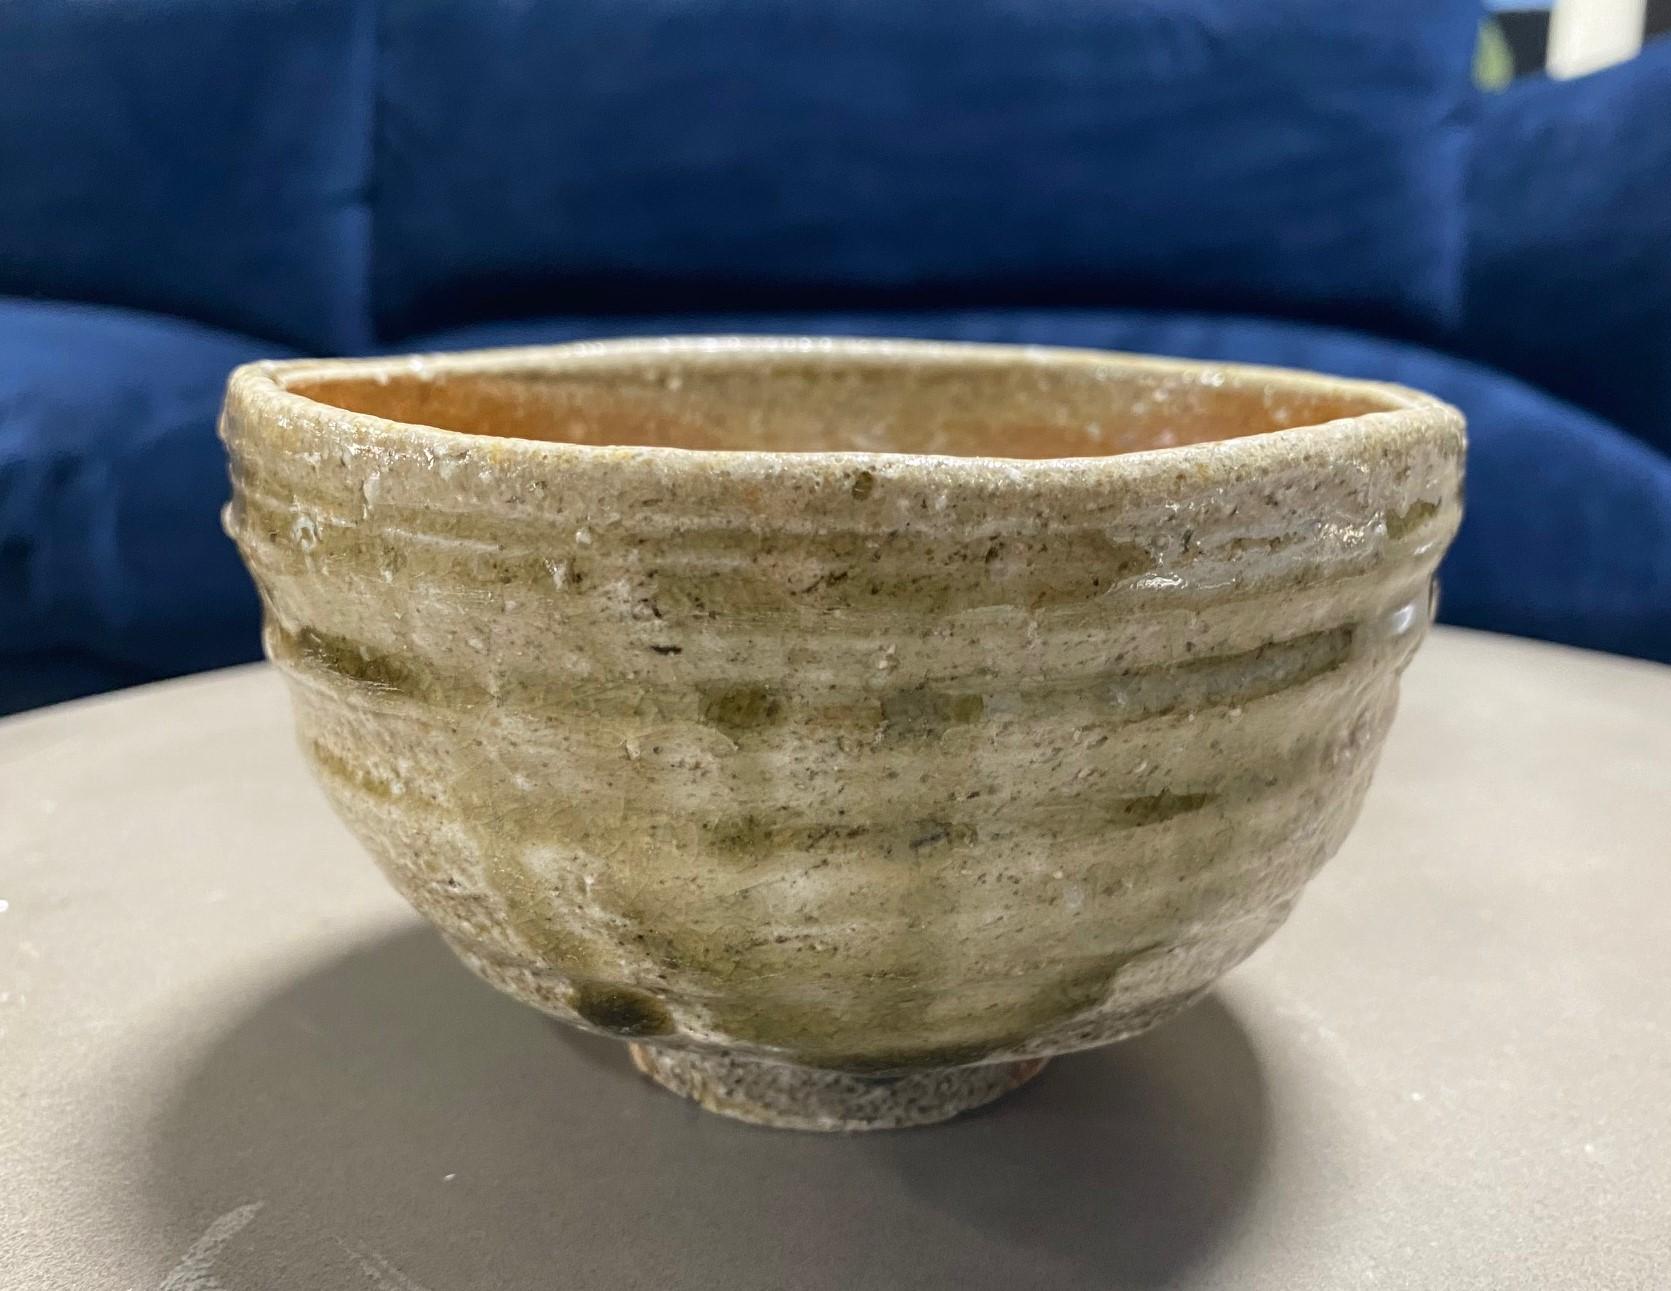 A stunning Shigaraki ware pottery chawan tea bowl by famed Japanese master potter the 3rd Rakusai Takahashi. The bowl features a beautiful, unique natural organic ash glaze with wonderful shifts in color and texture. 

Rakusai Takahashi III